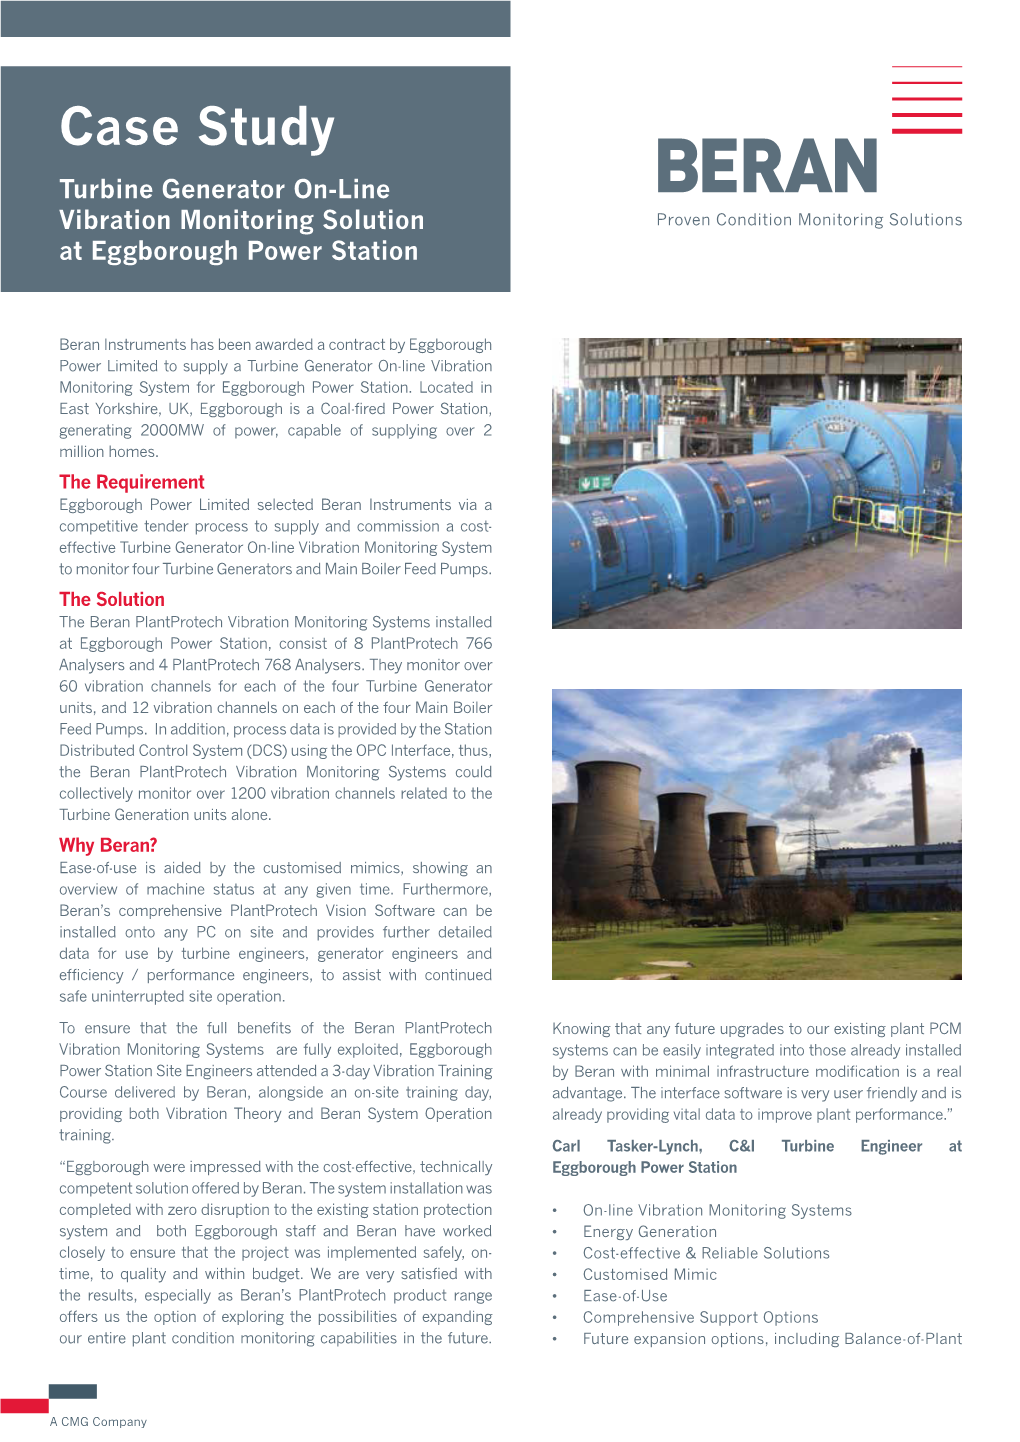 Case Study Turbine Generator On-Line Vibration Monitoring Solution at Eggborough Power Station